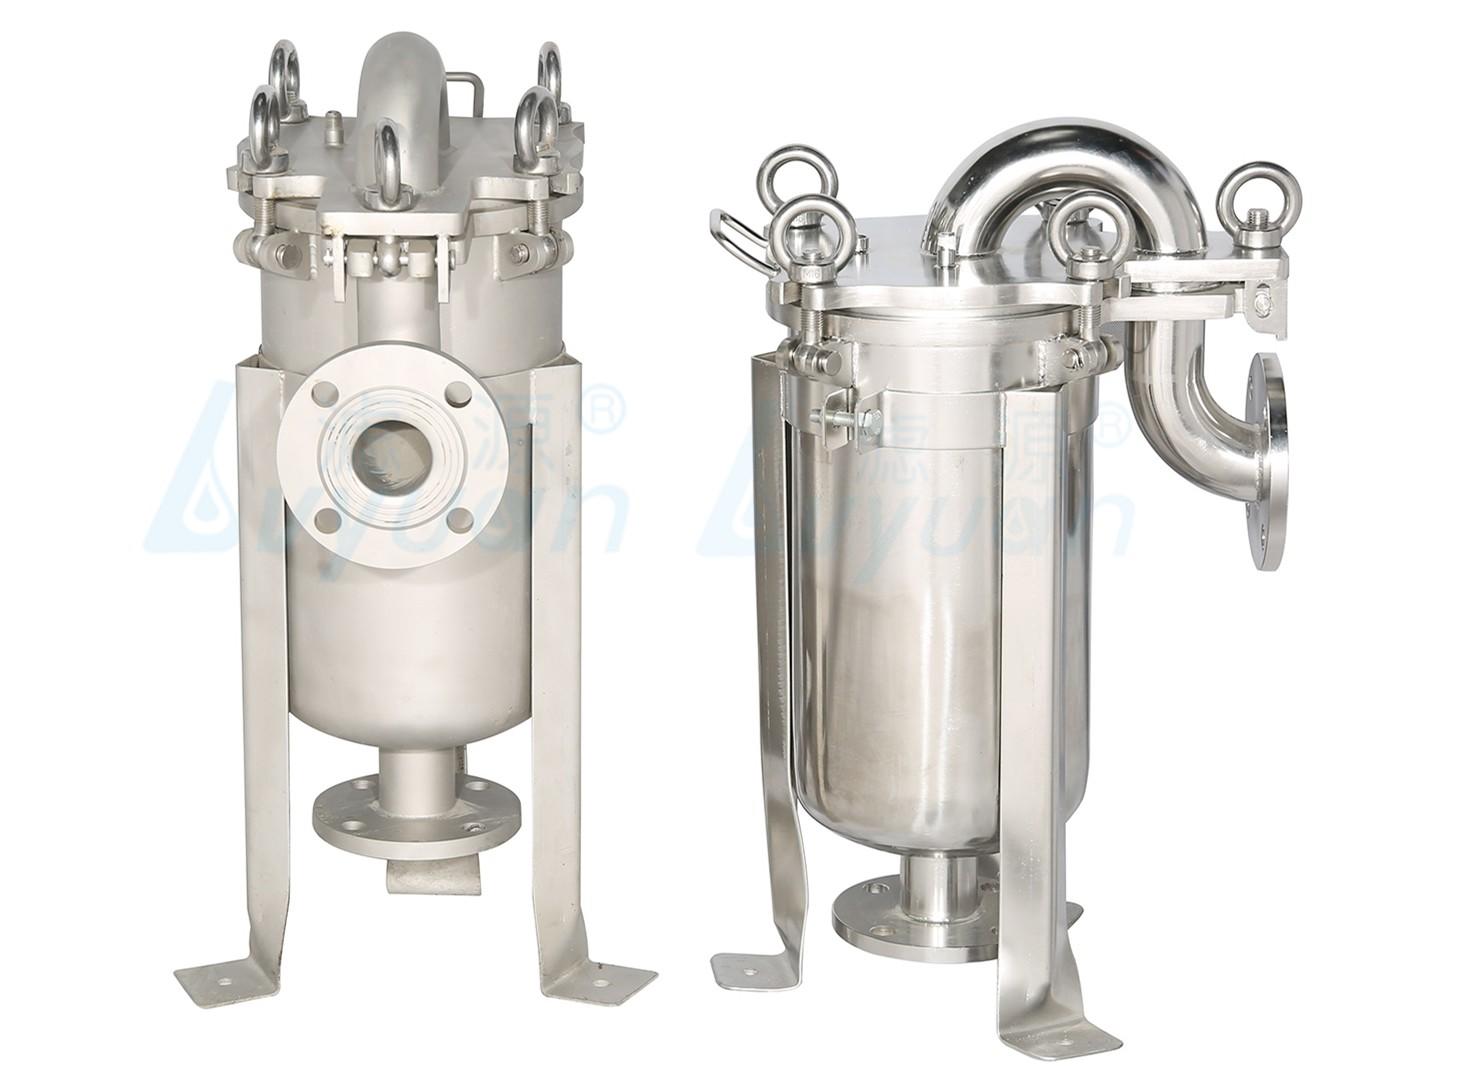 Lvyuan efficient ss bag filter housing rod for sea water desalination